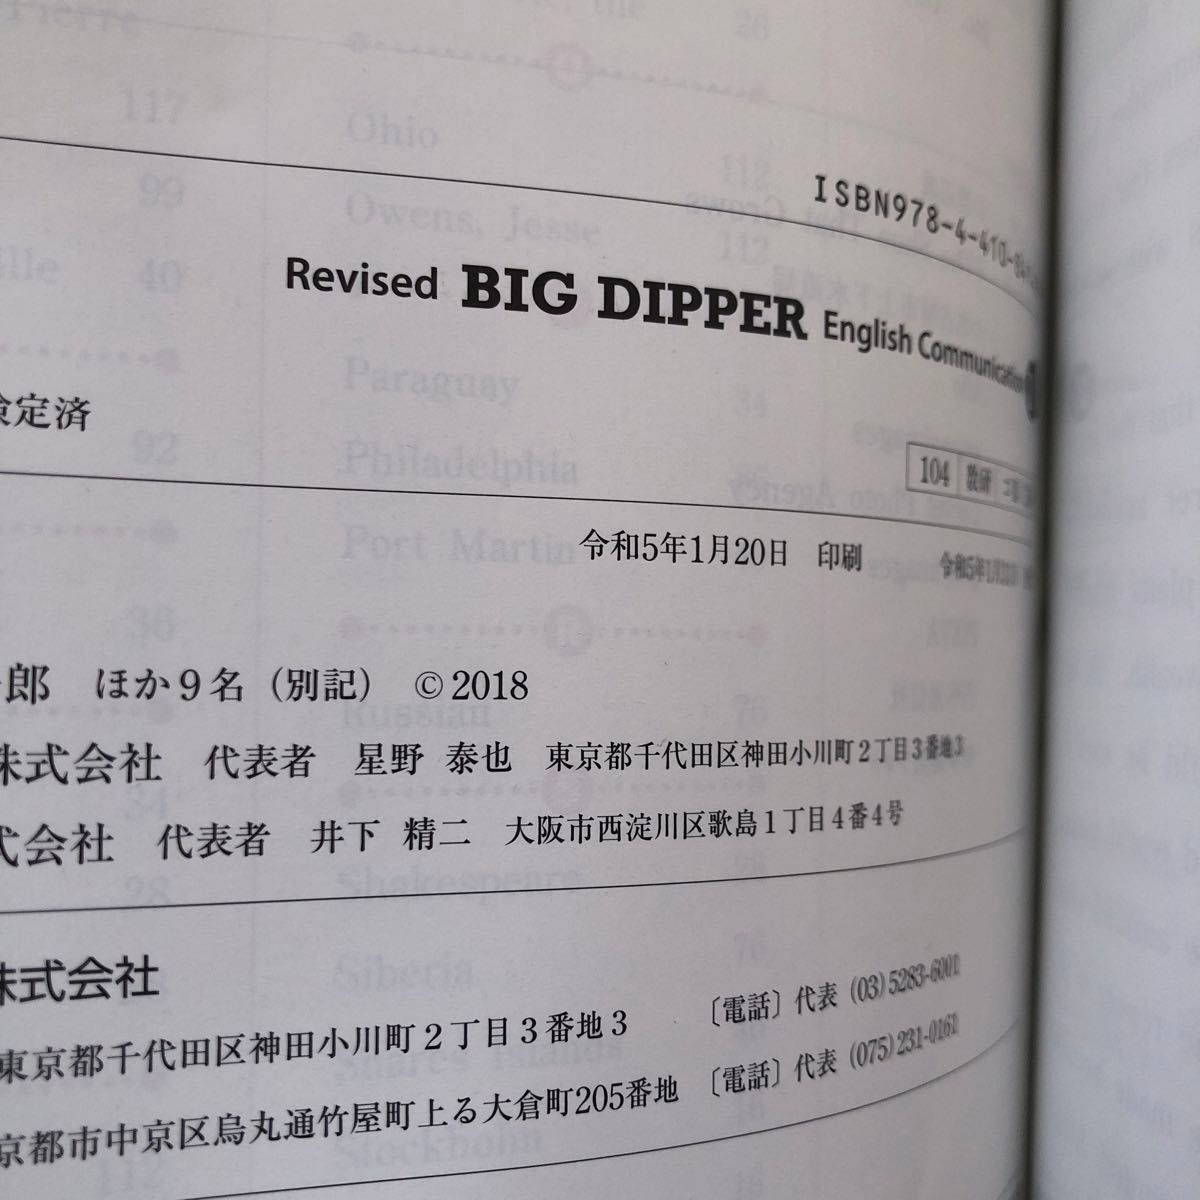 BIGDIPPER Revised BIG DIPPER English Communication Ⅲ